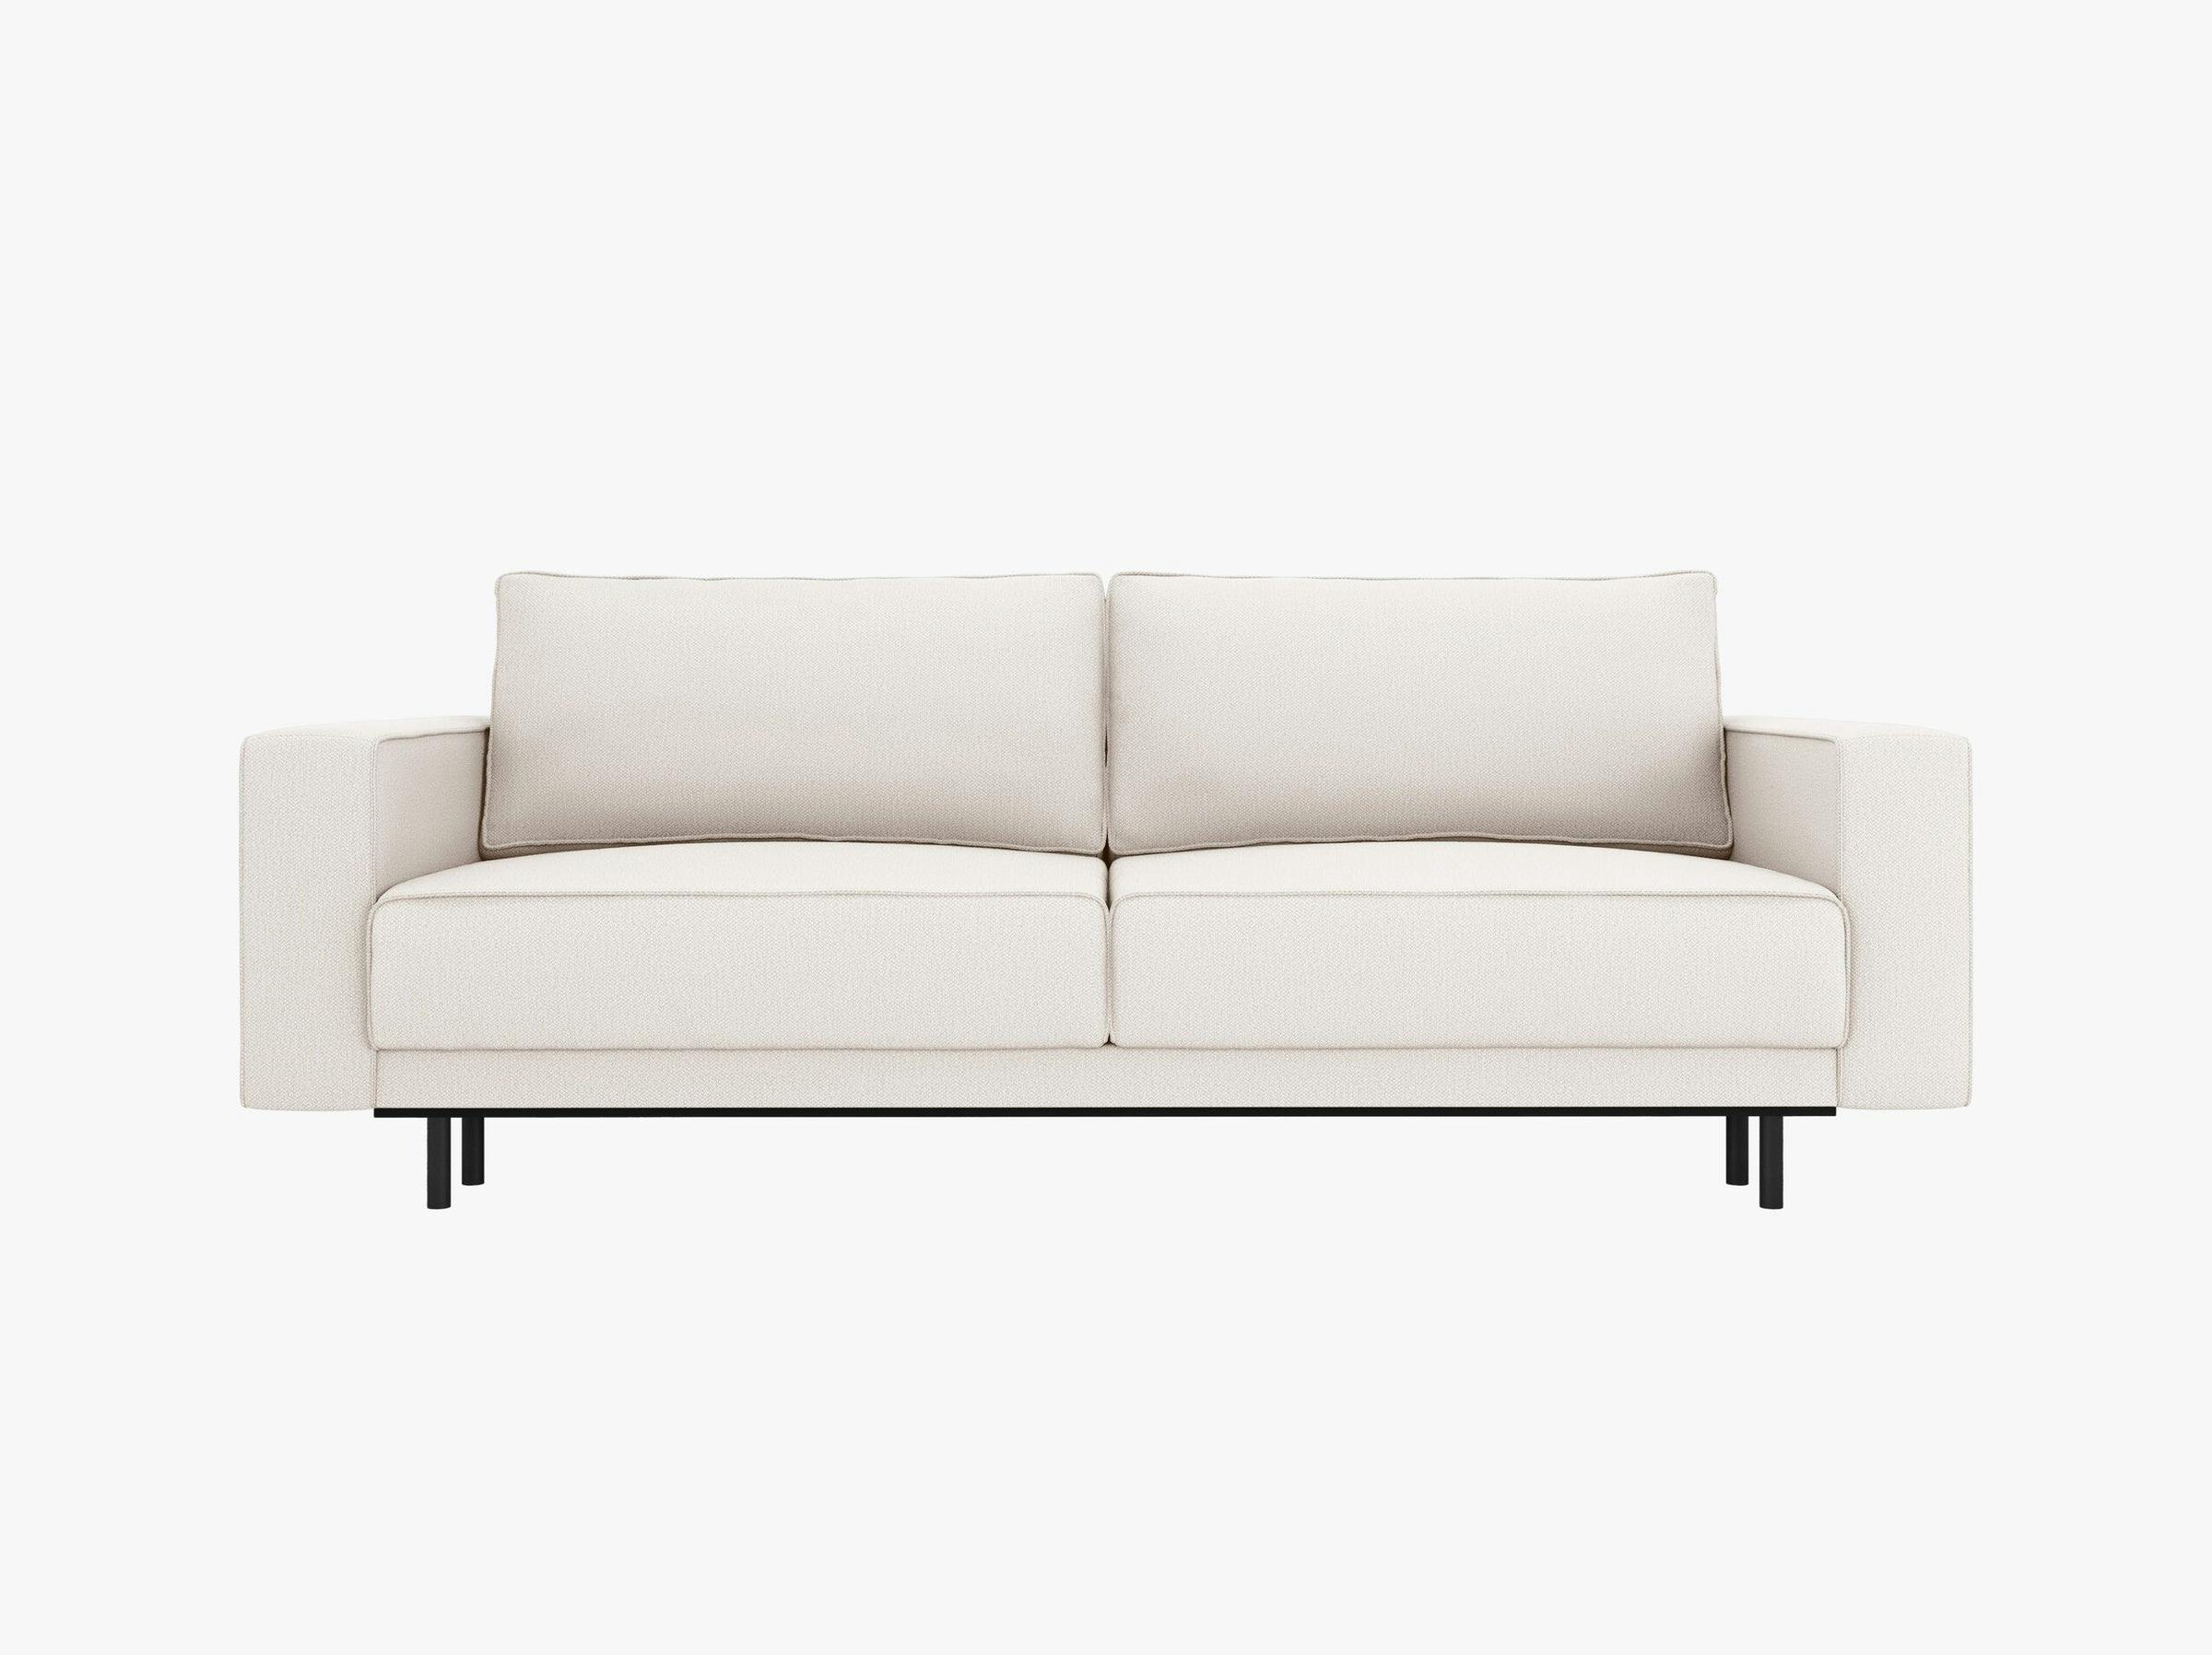 Caro sofas structured fabric light beige